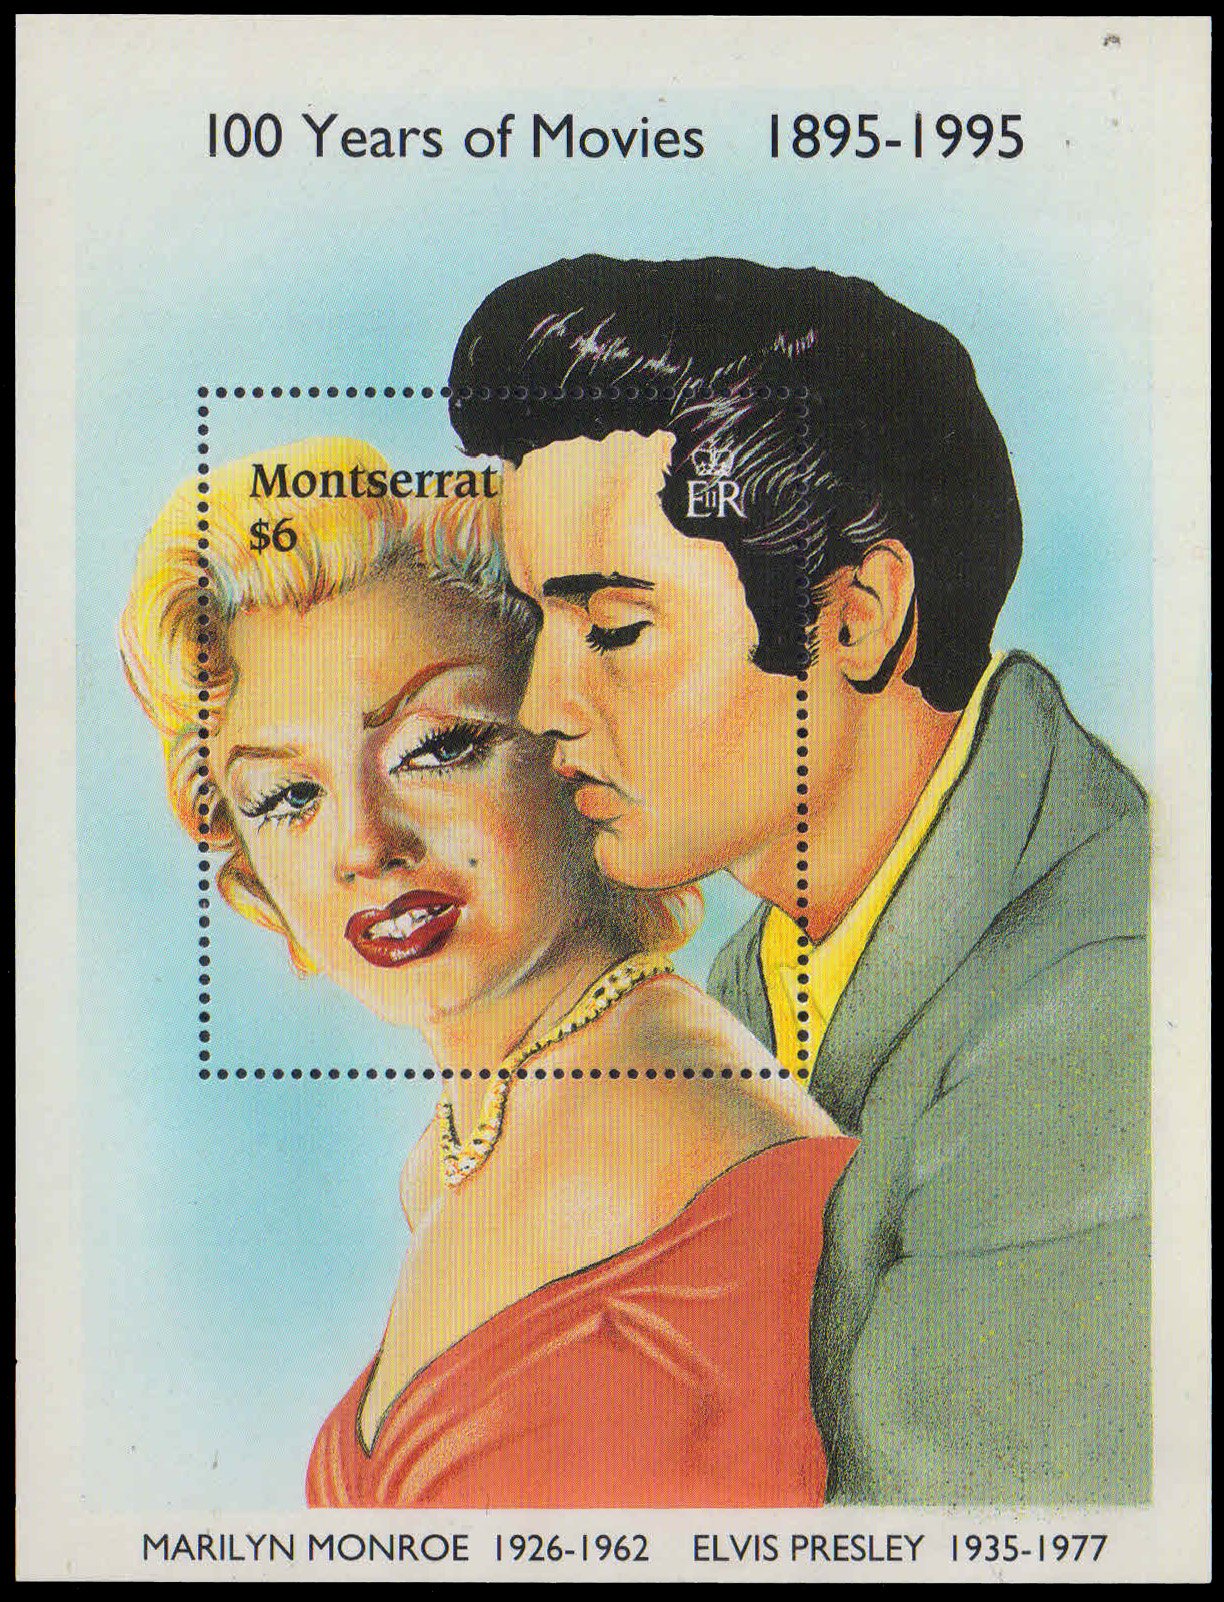 MONTSERRAT 1995 - Marilyn Monroe and Elvis Presley, Centenary of Cinema, Film Cinema, Movies, Miniature Sheet, MNH, S.G. MS 965